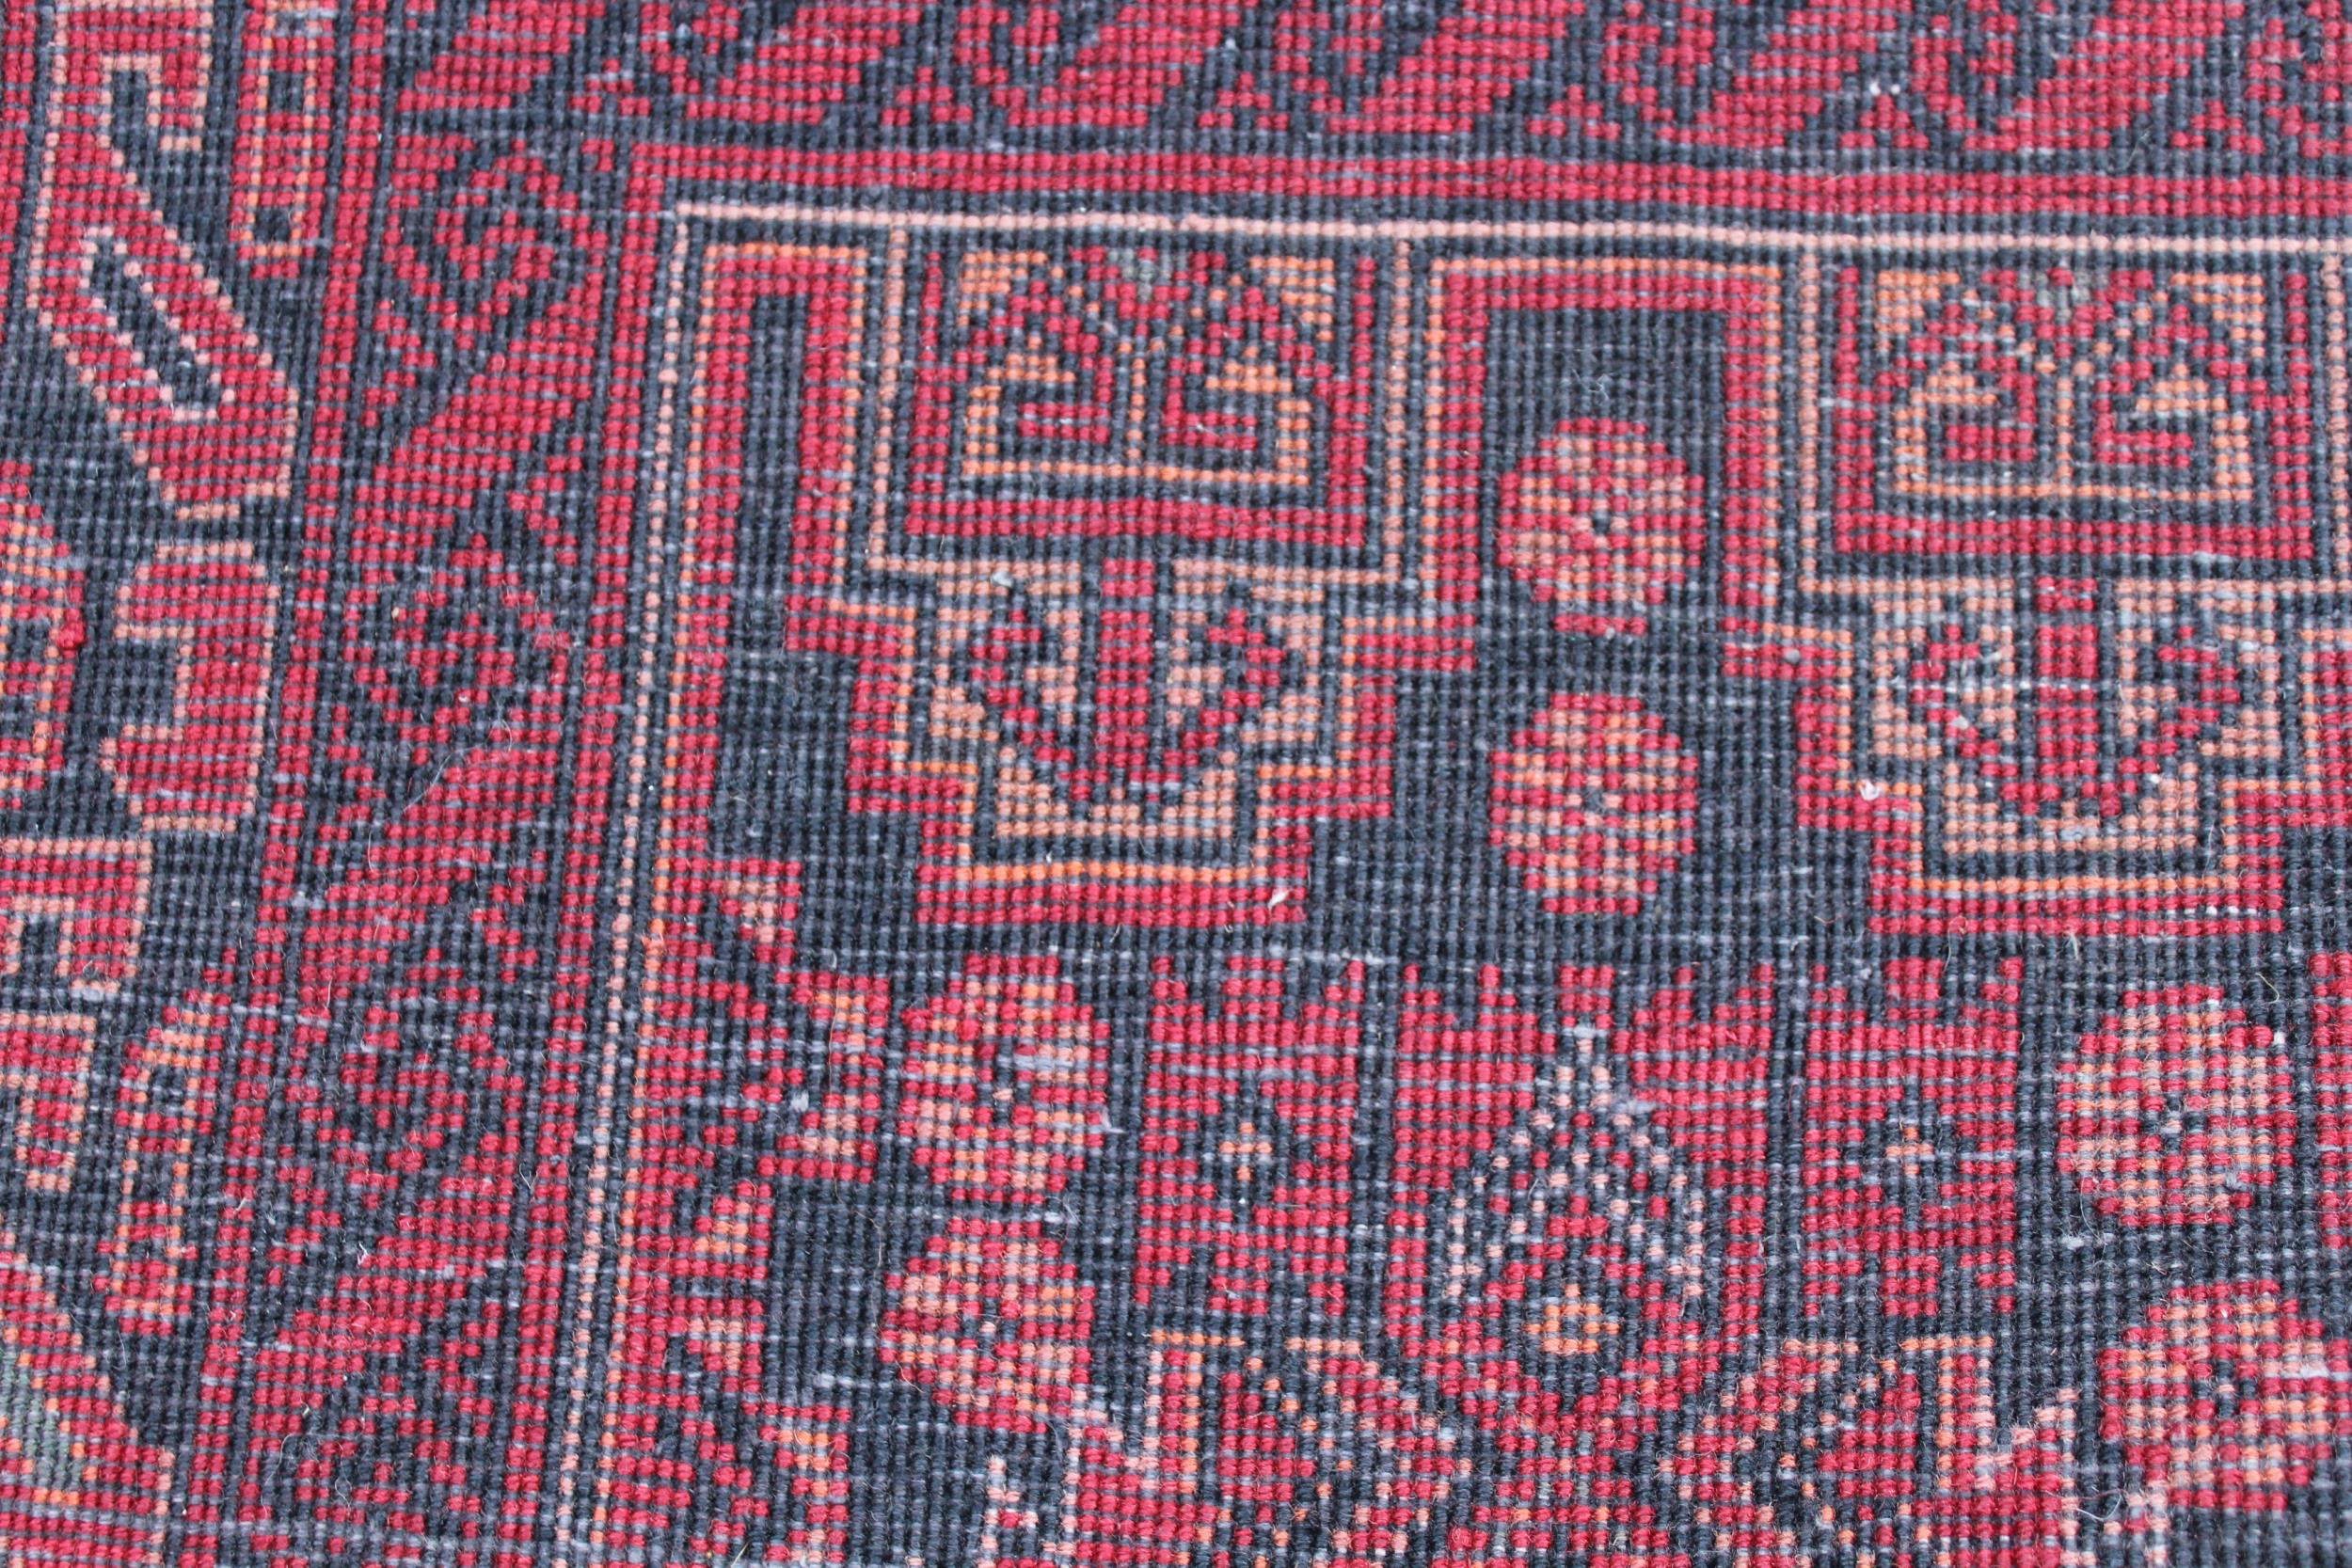 Belouch rug, 1.9m x 1m - Image 2 of 2